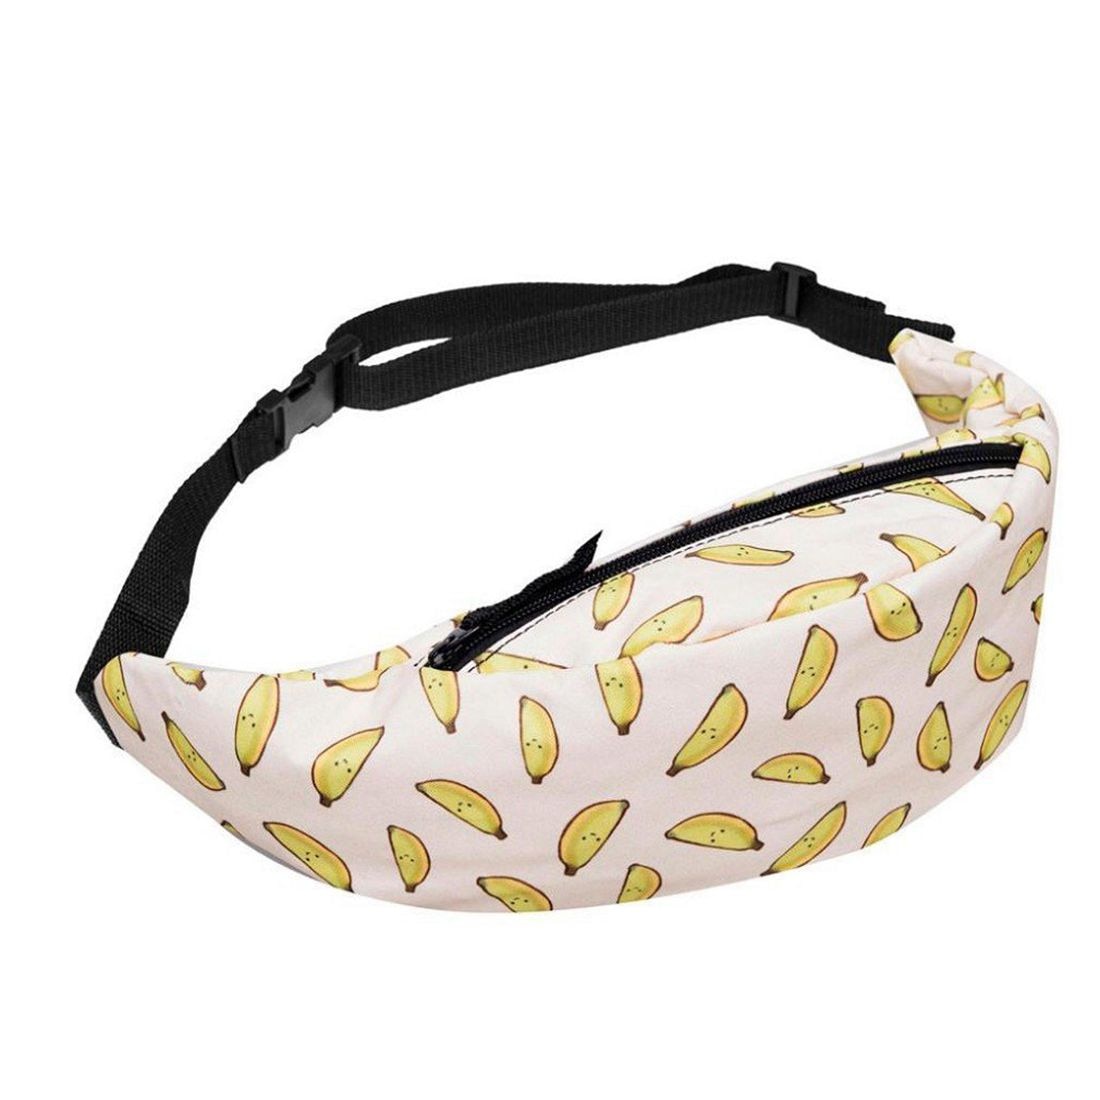 2018 hot sales 3d printing women's zipper bag Waist bag fanny packs bum bag travelling Bag Yellow banana pattern - ebowsos